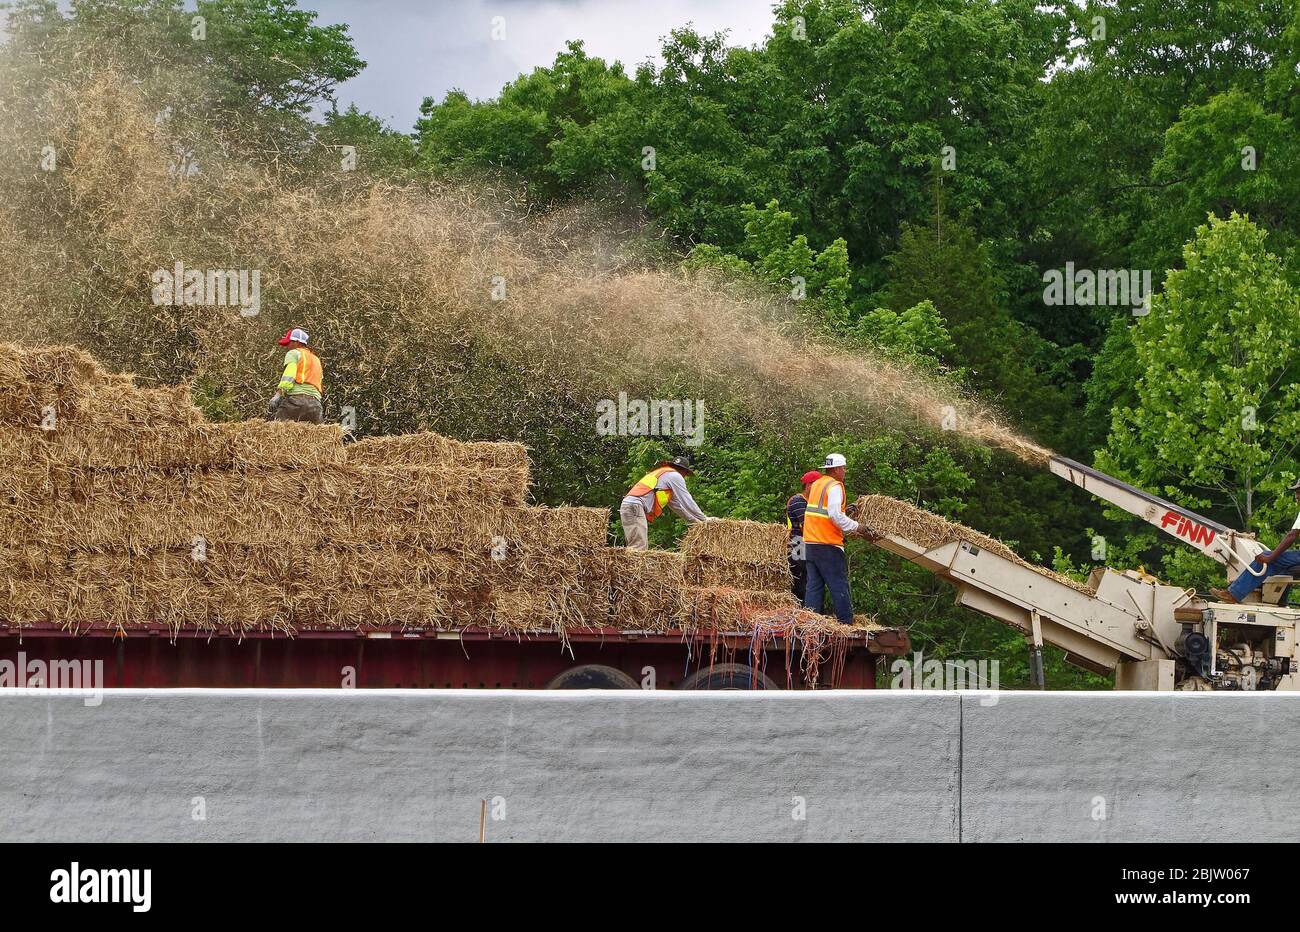 bale shredder, straw, men working, spreading to absorb water, job, machinery, Kentucky; USA; Paducah; KY, spring Stock Photo